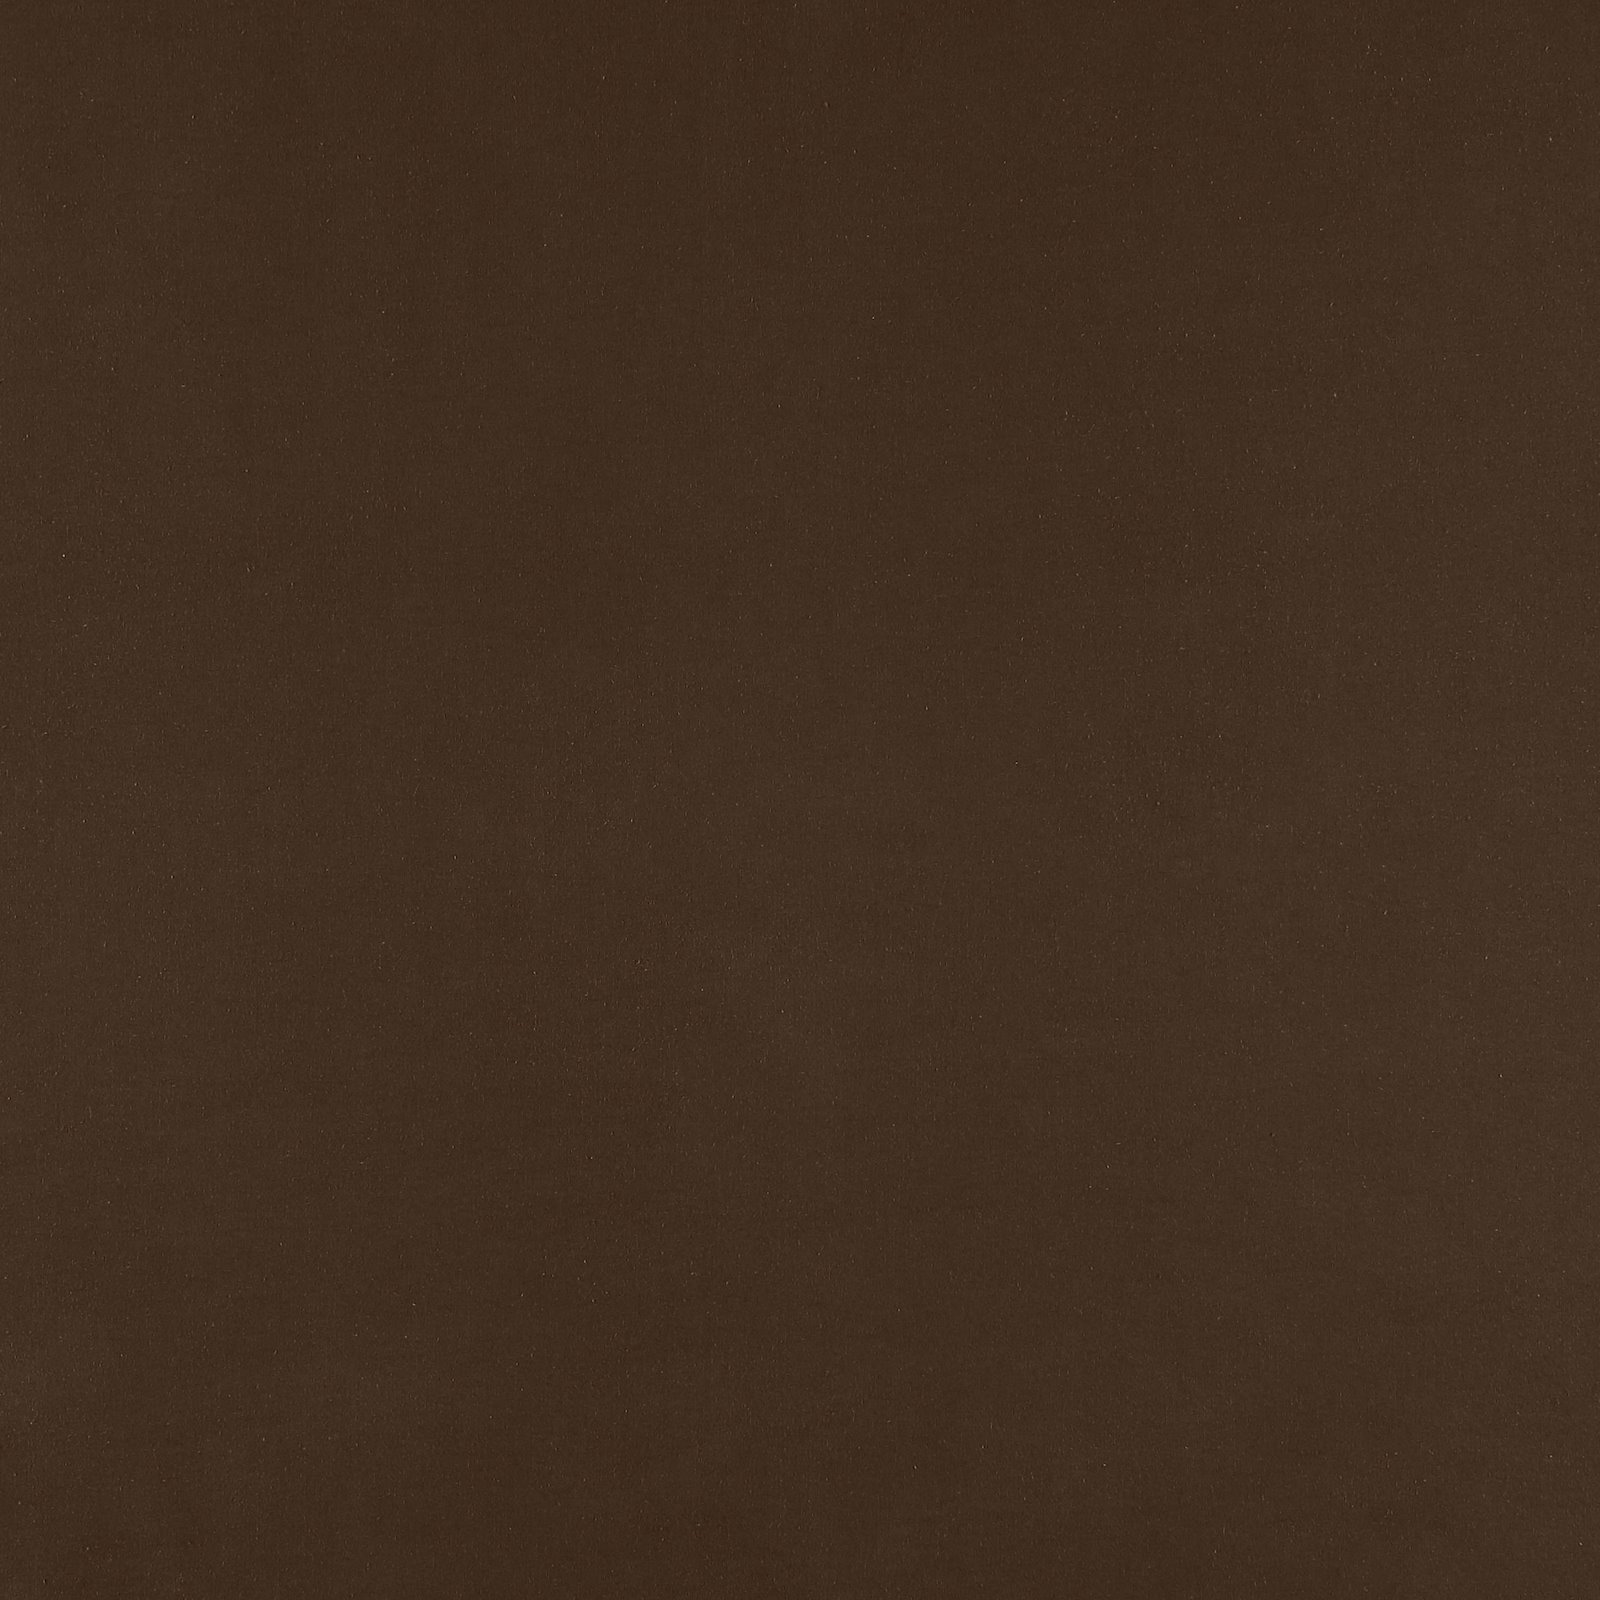 Organic kraftig sweatshirt mörkbrun bors 211810_pack_solid